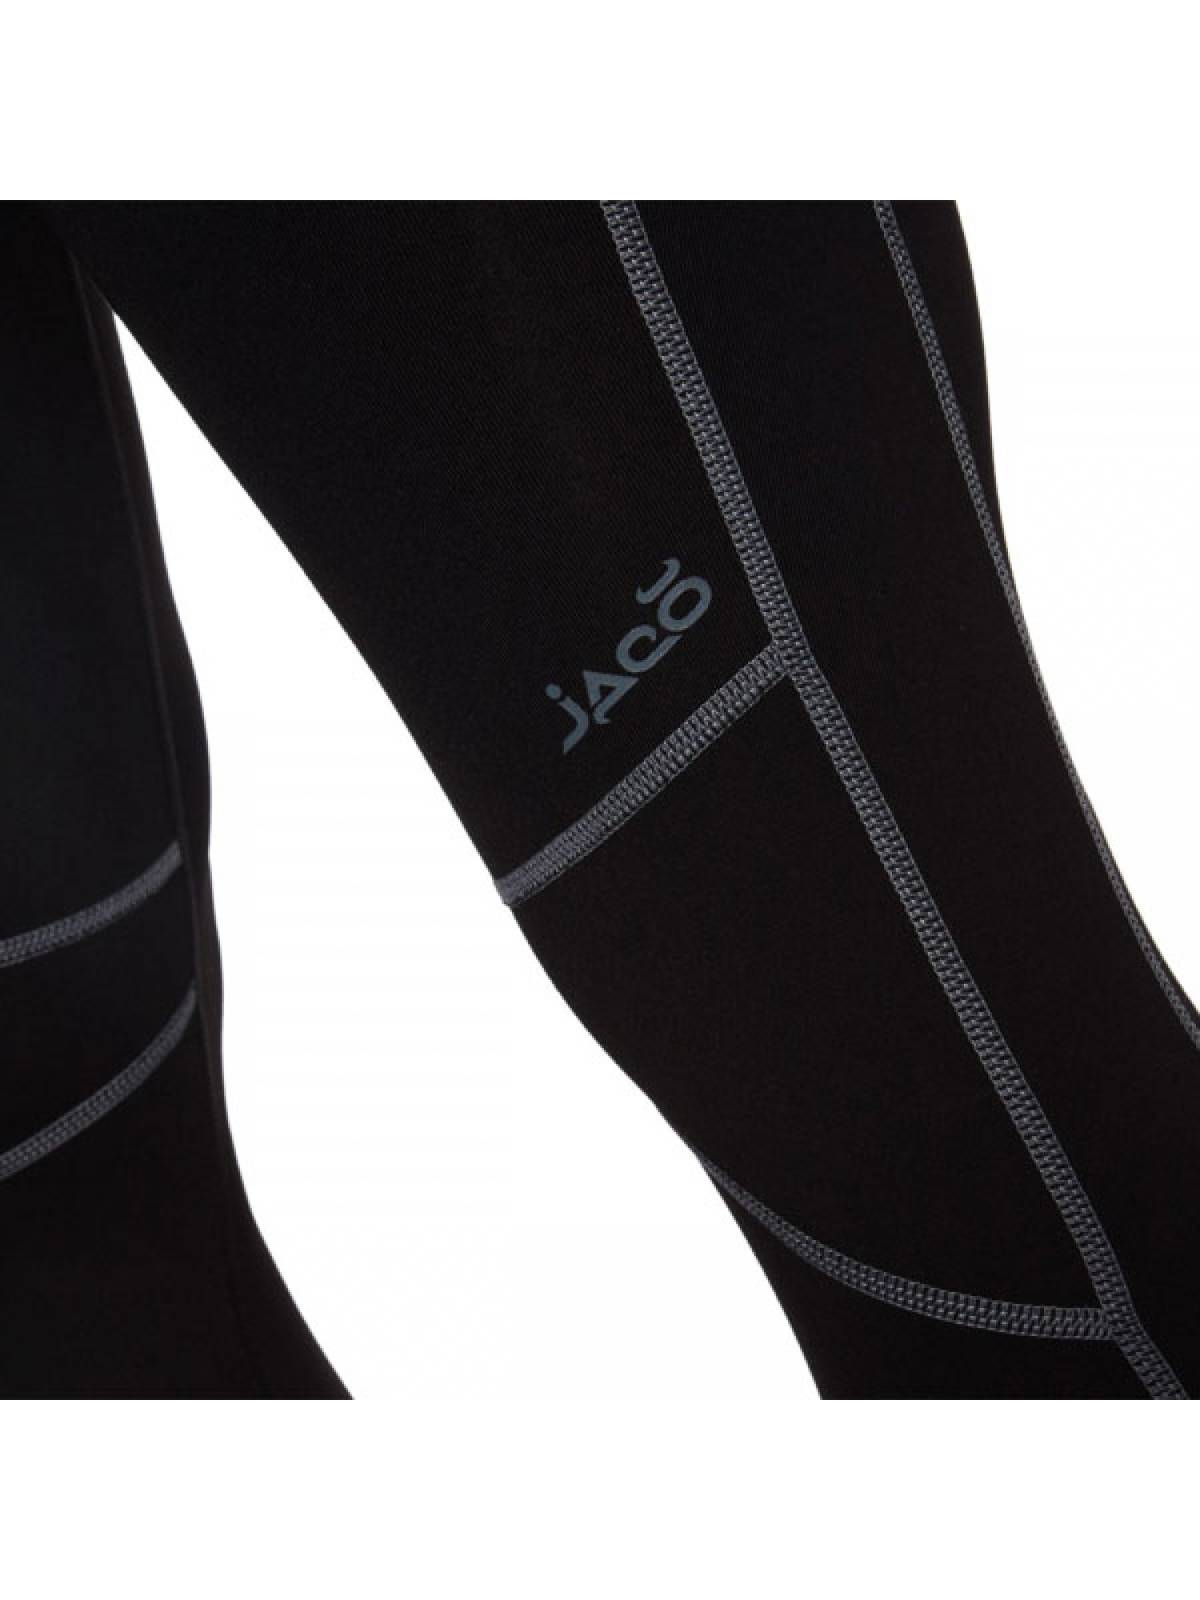 Jaco Athletic Pants for Women, Black Activewear Yoga Pants with Elastic Waistband, Large - image 3 of 5